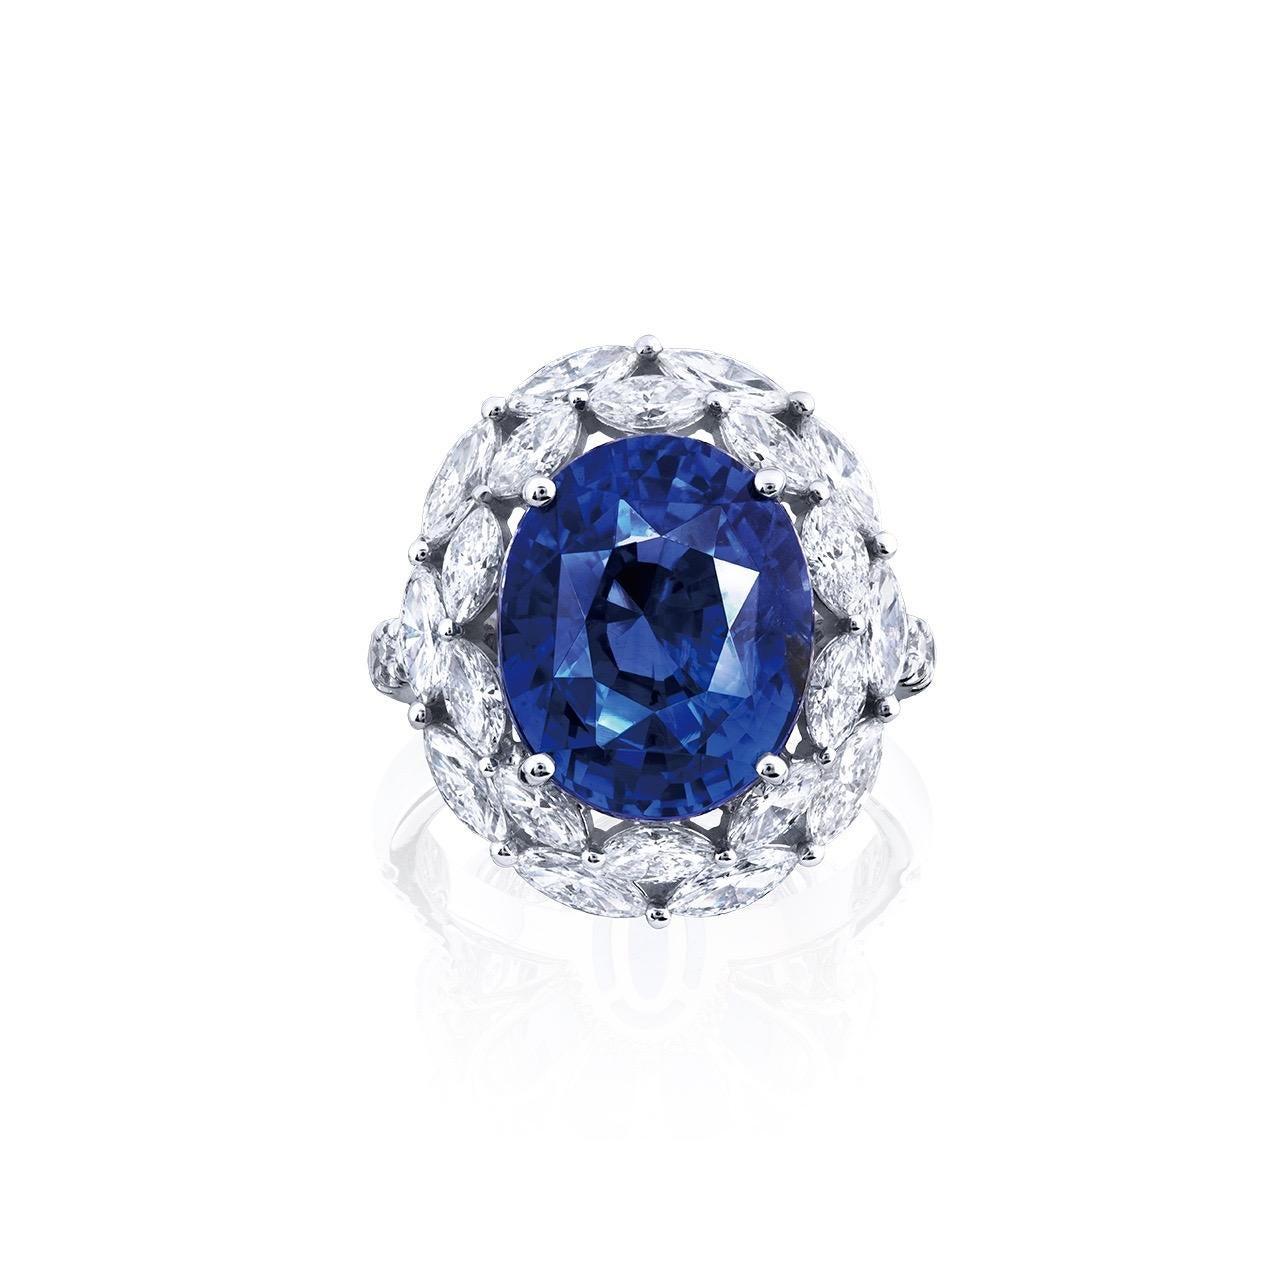 Emilio Jewelry Certified 14.00 Carat Untreated Cornflower Blue Sapphire Ring